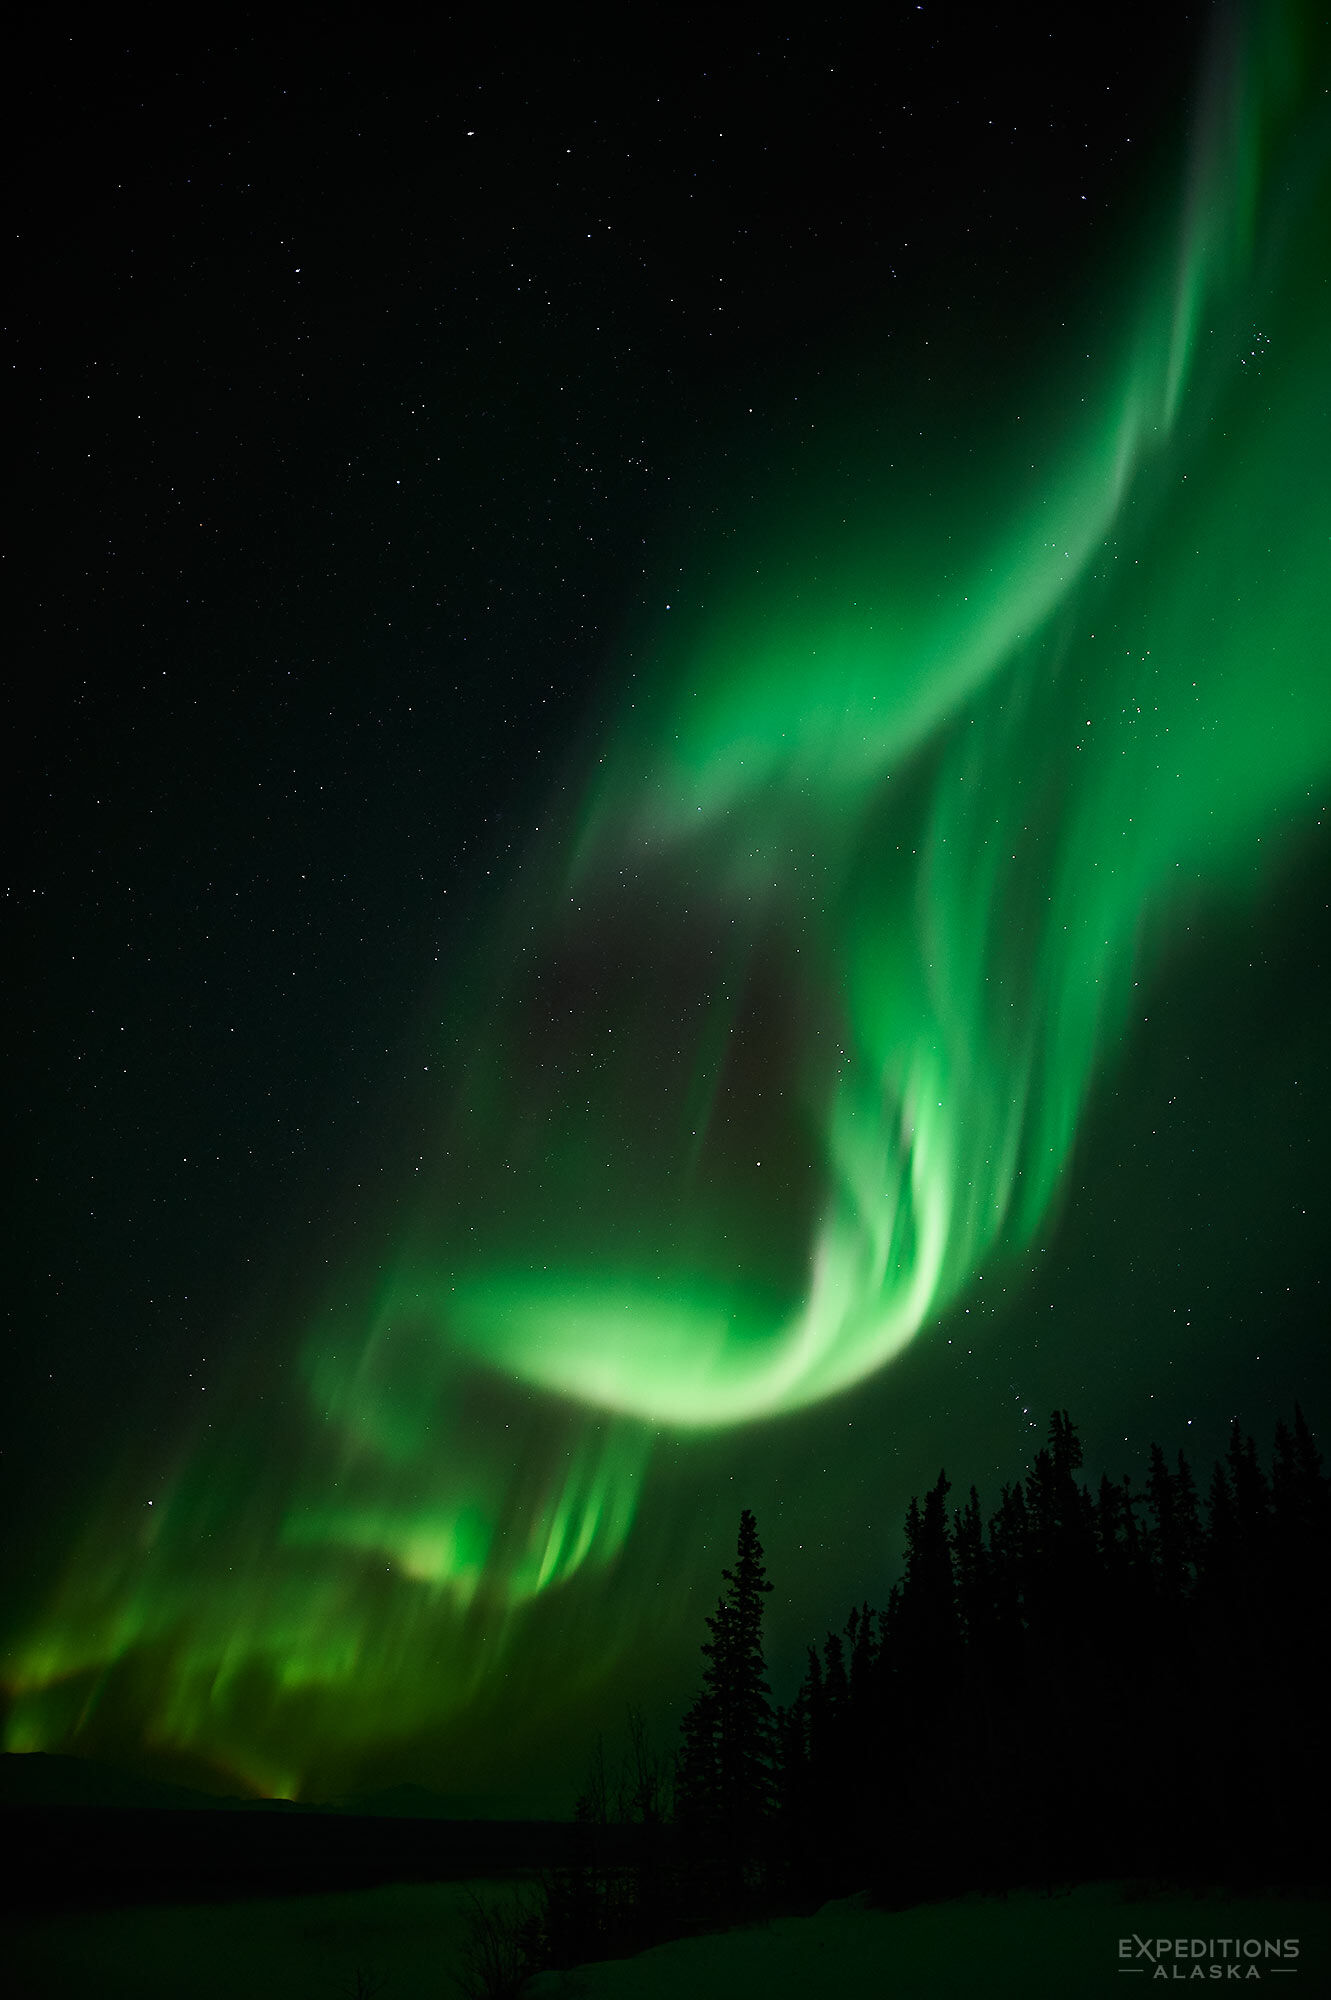 Aurora borealis, lighting up the night skies above the boreal forest of Wrangell - St. Elias National Park, Alaska